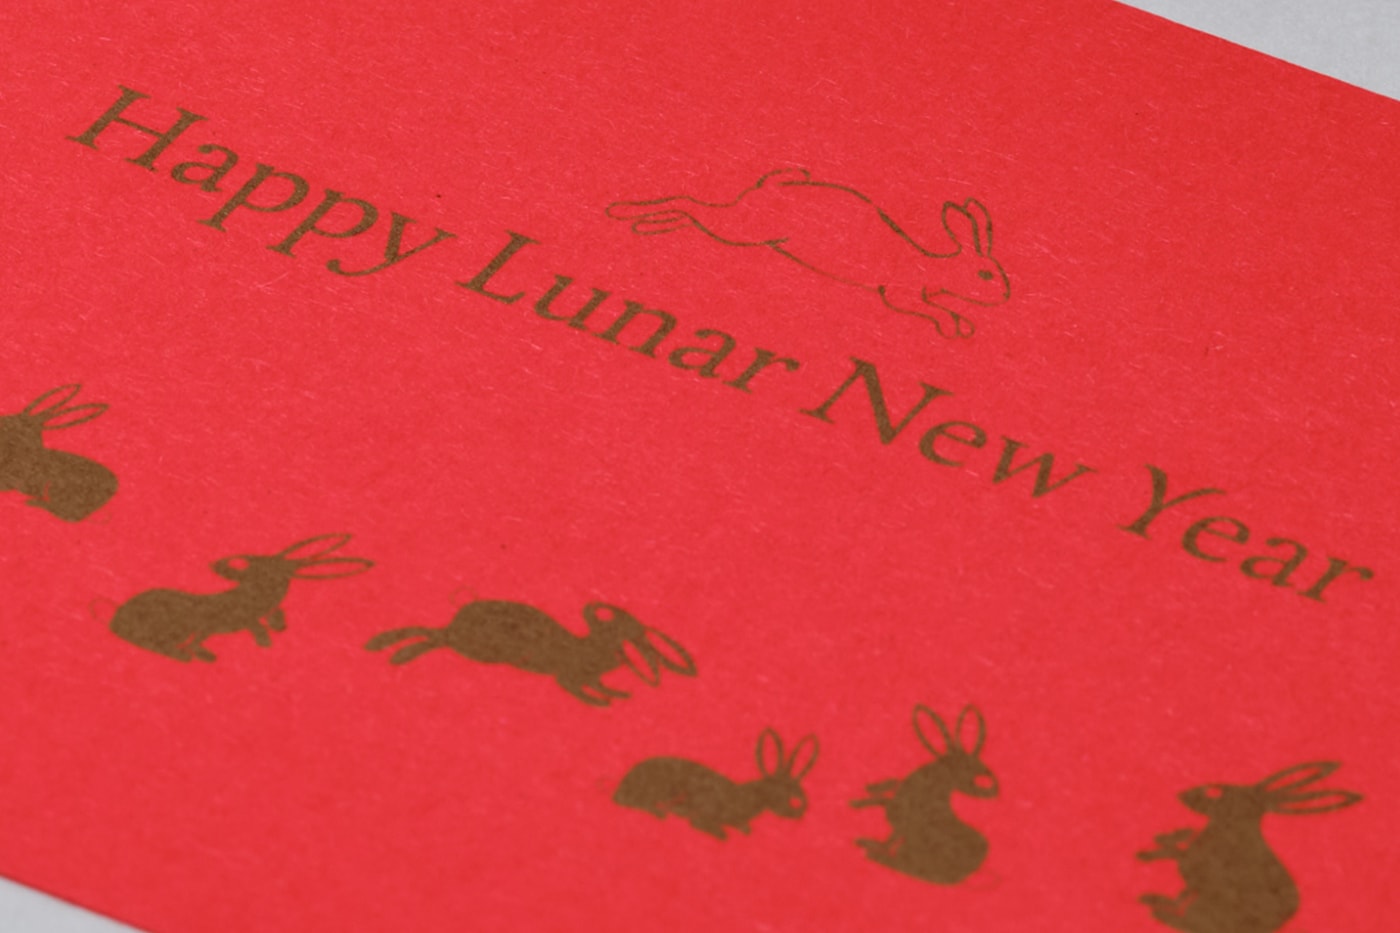 K11 x BUNNEY Lunar New Year GORE-TEX Red Packets